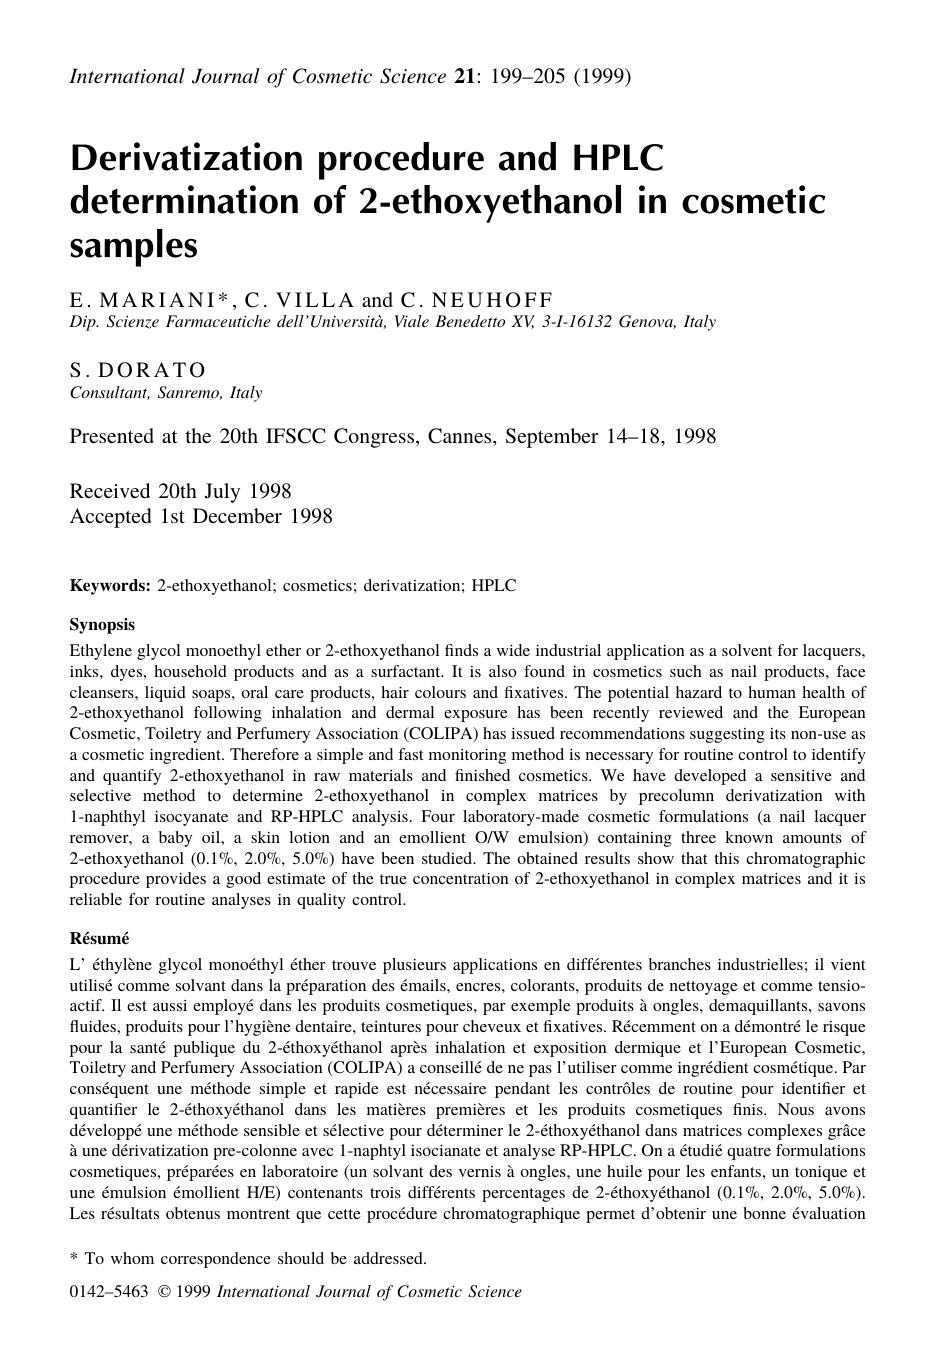 Derivatization Procedure and HPLC Determination of 2-Ethoxyethanol in Cosmetic Samples by E . MARIANI C . VILLA C . NEUHOFF & S> DORATO